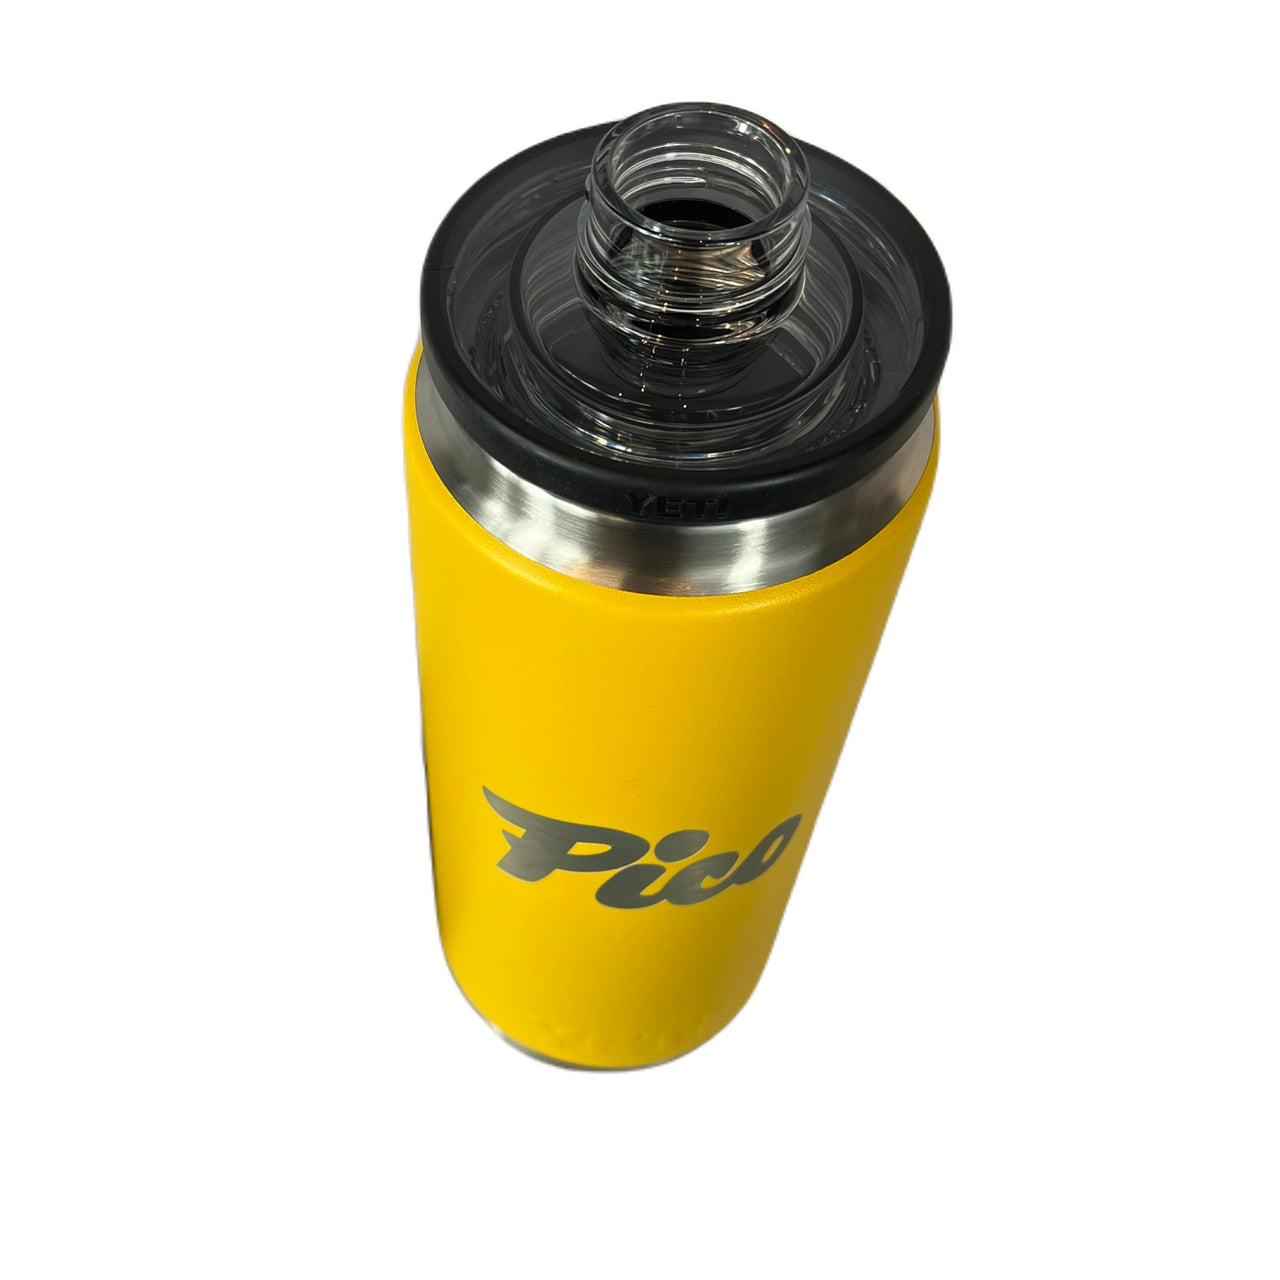 YETI Rambler 26oz Water Bottle with Chug Cap - Alpine Yellow